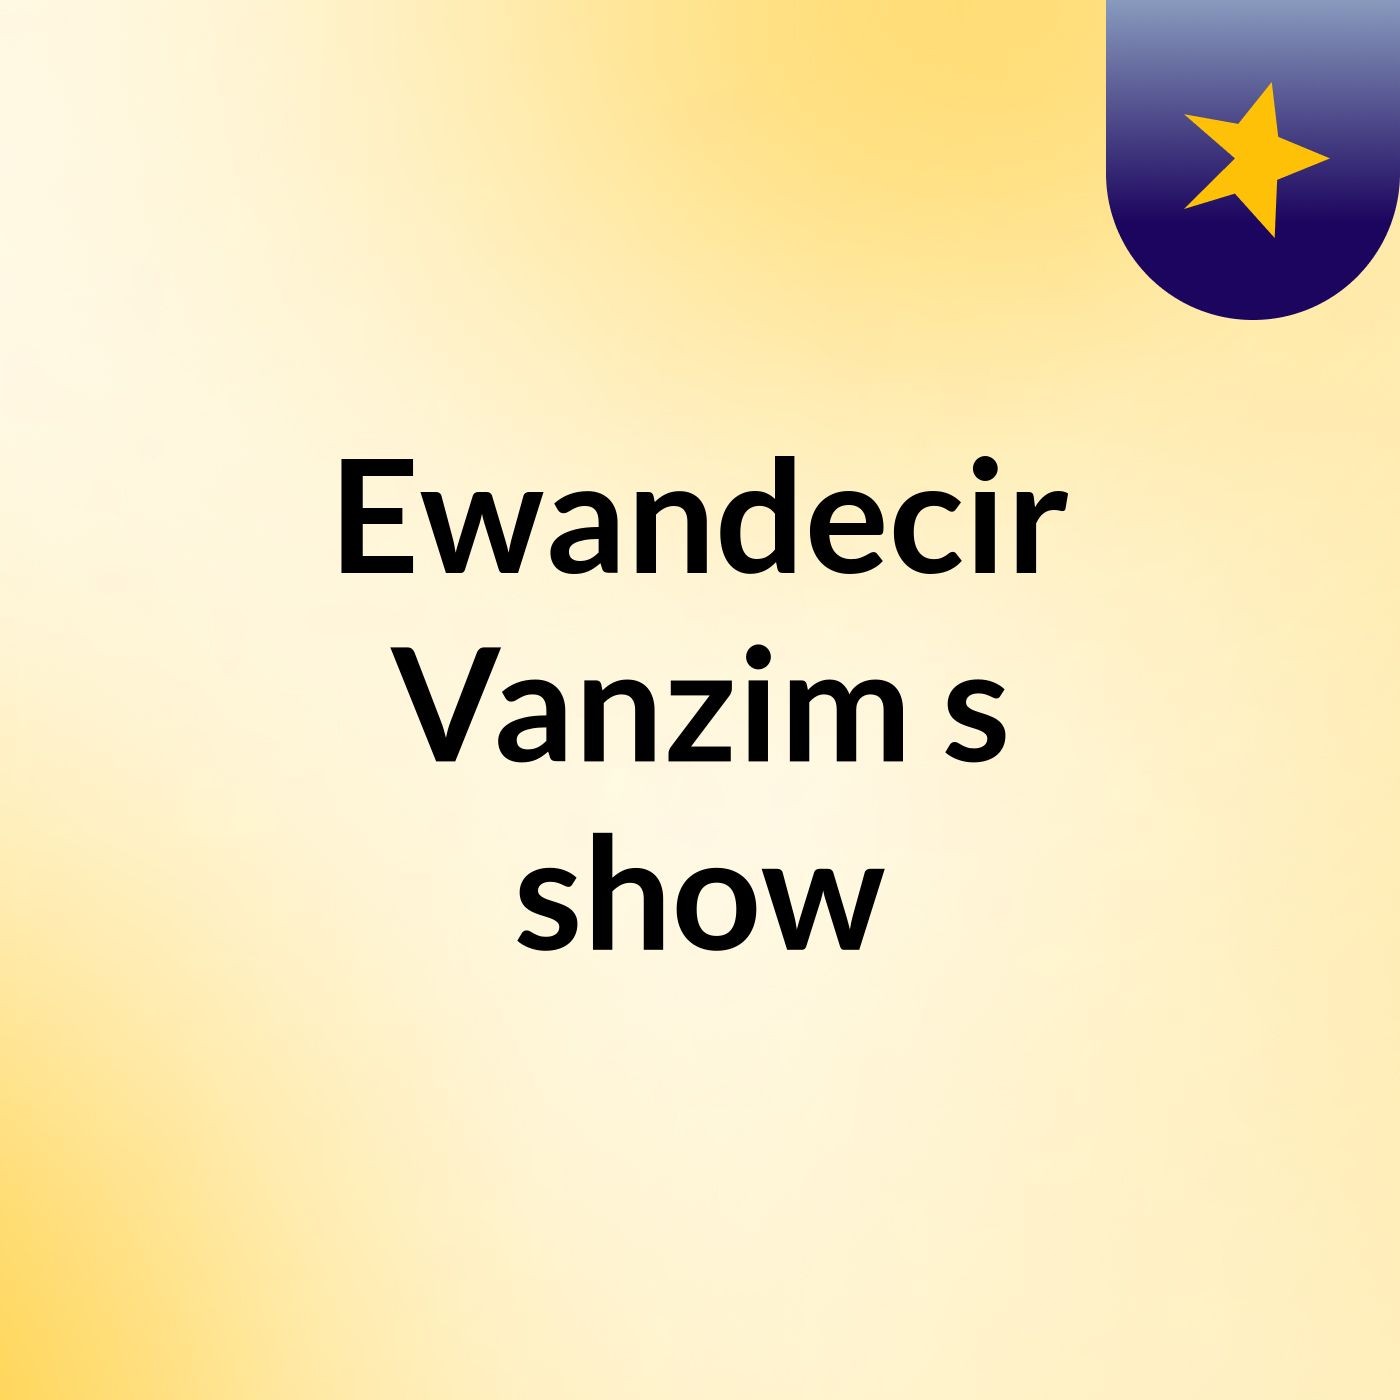 Ewandecir Vanzim's show